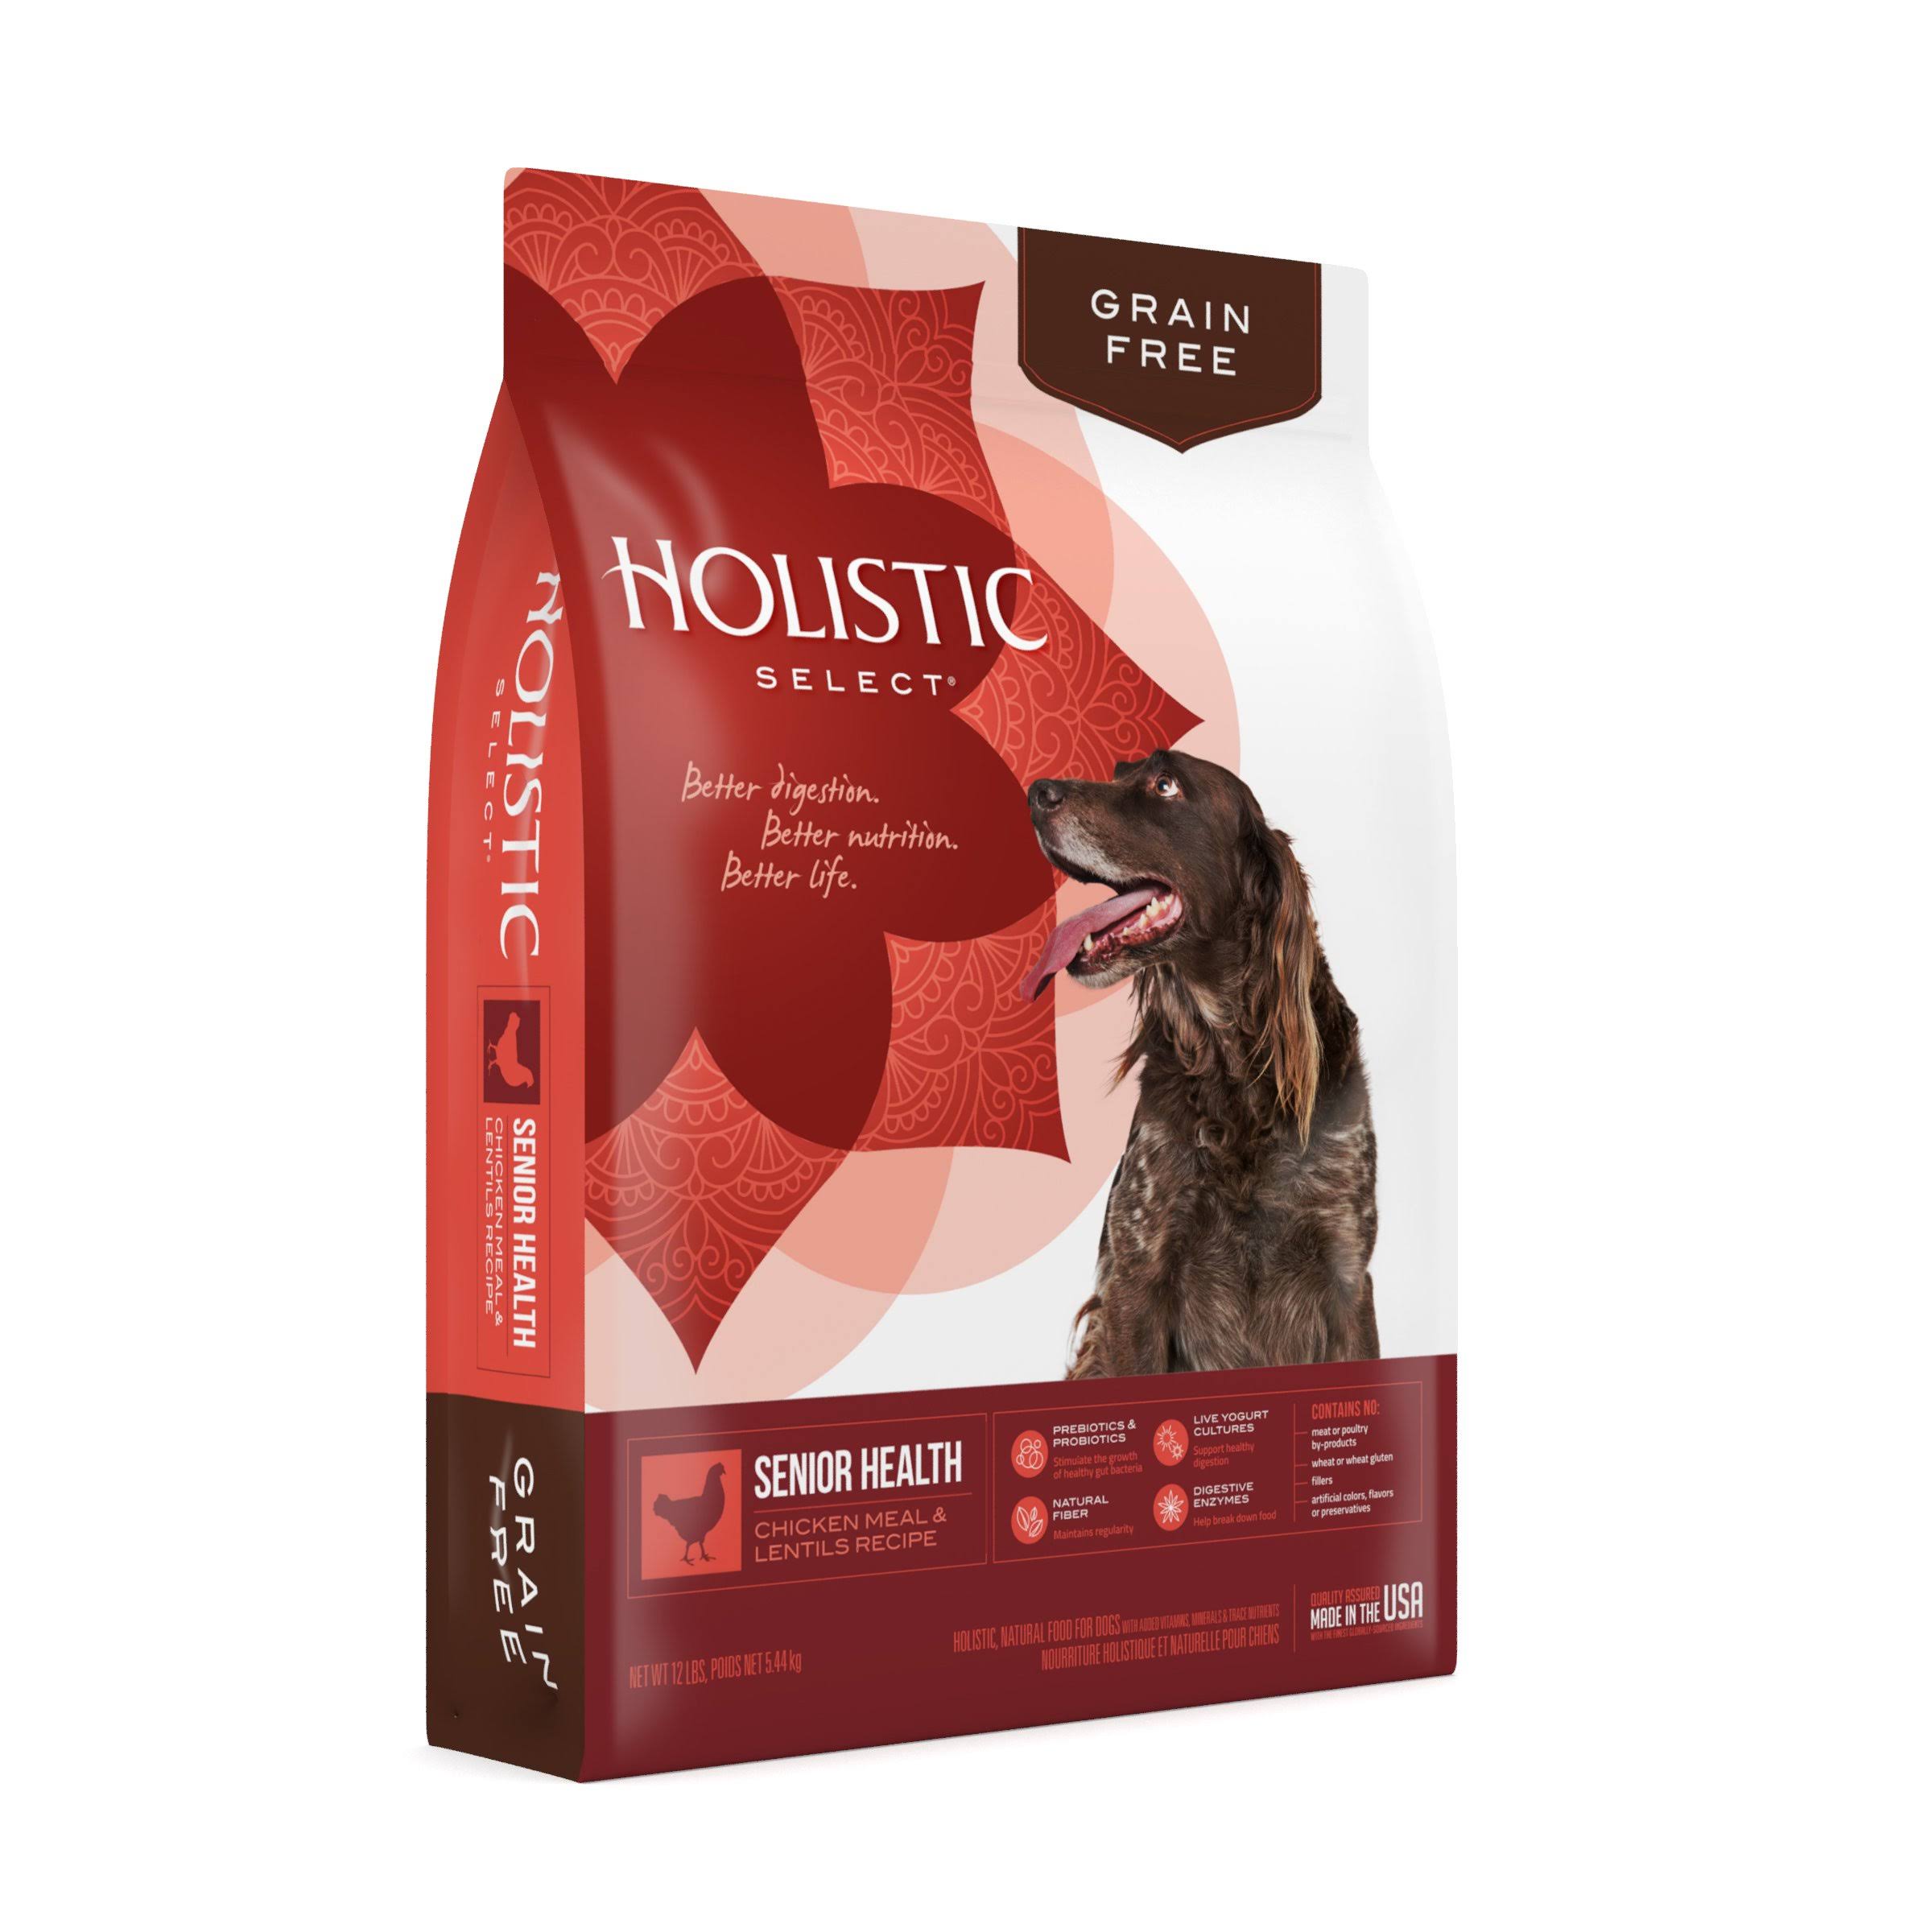 Holistic Select Natural Grain Free Dry Dog Food, Senior Chicken Meal & Lentil Recipe, 12-Pound Bag